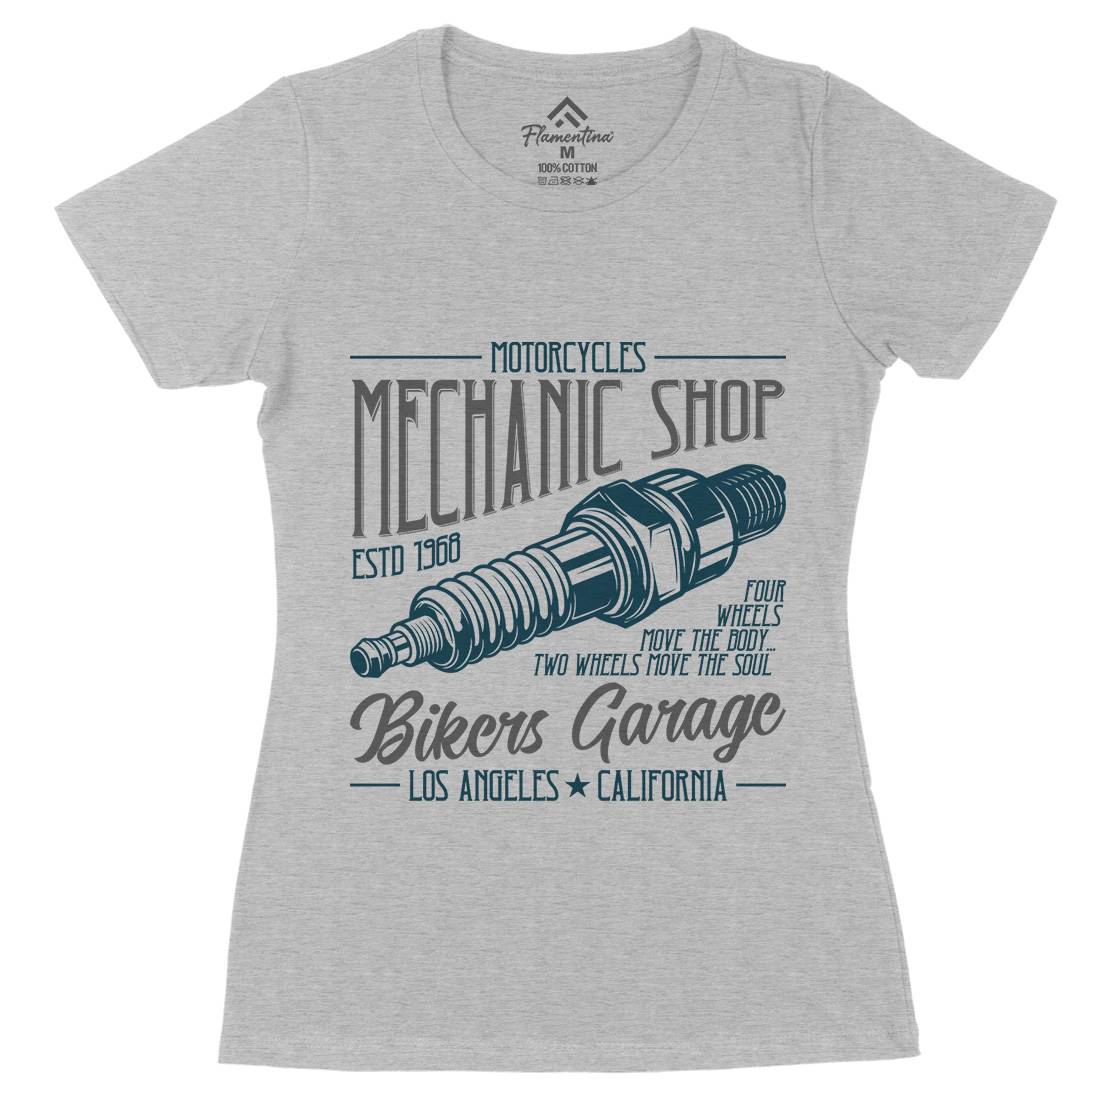 Mechanic Shop Womens Organic Crew Neck T-Shirt Motorcycles B836